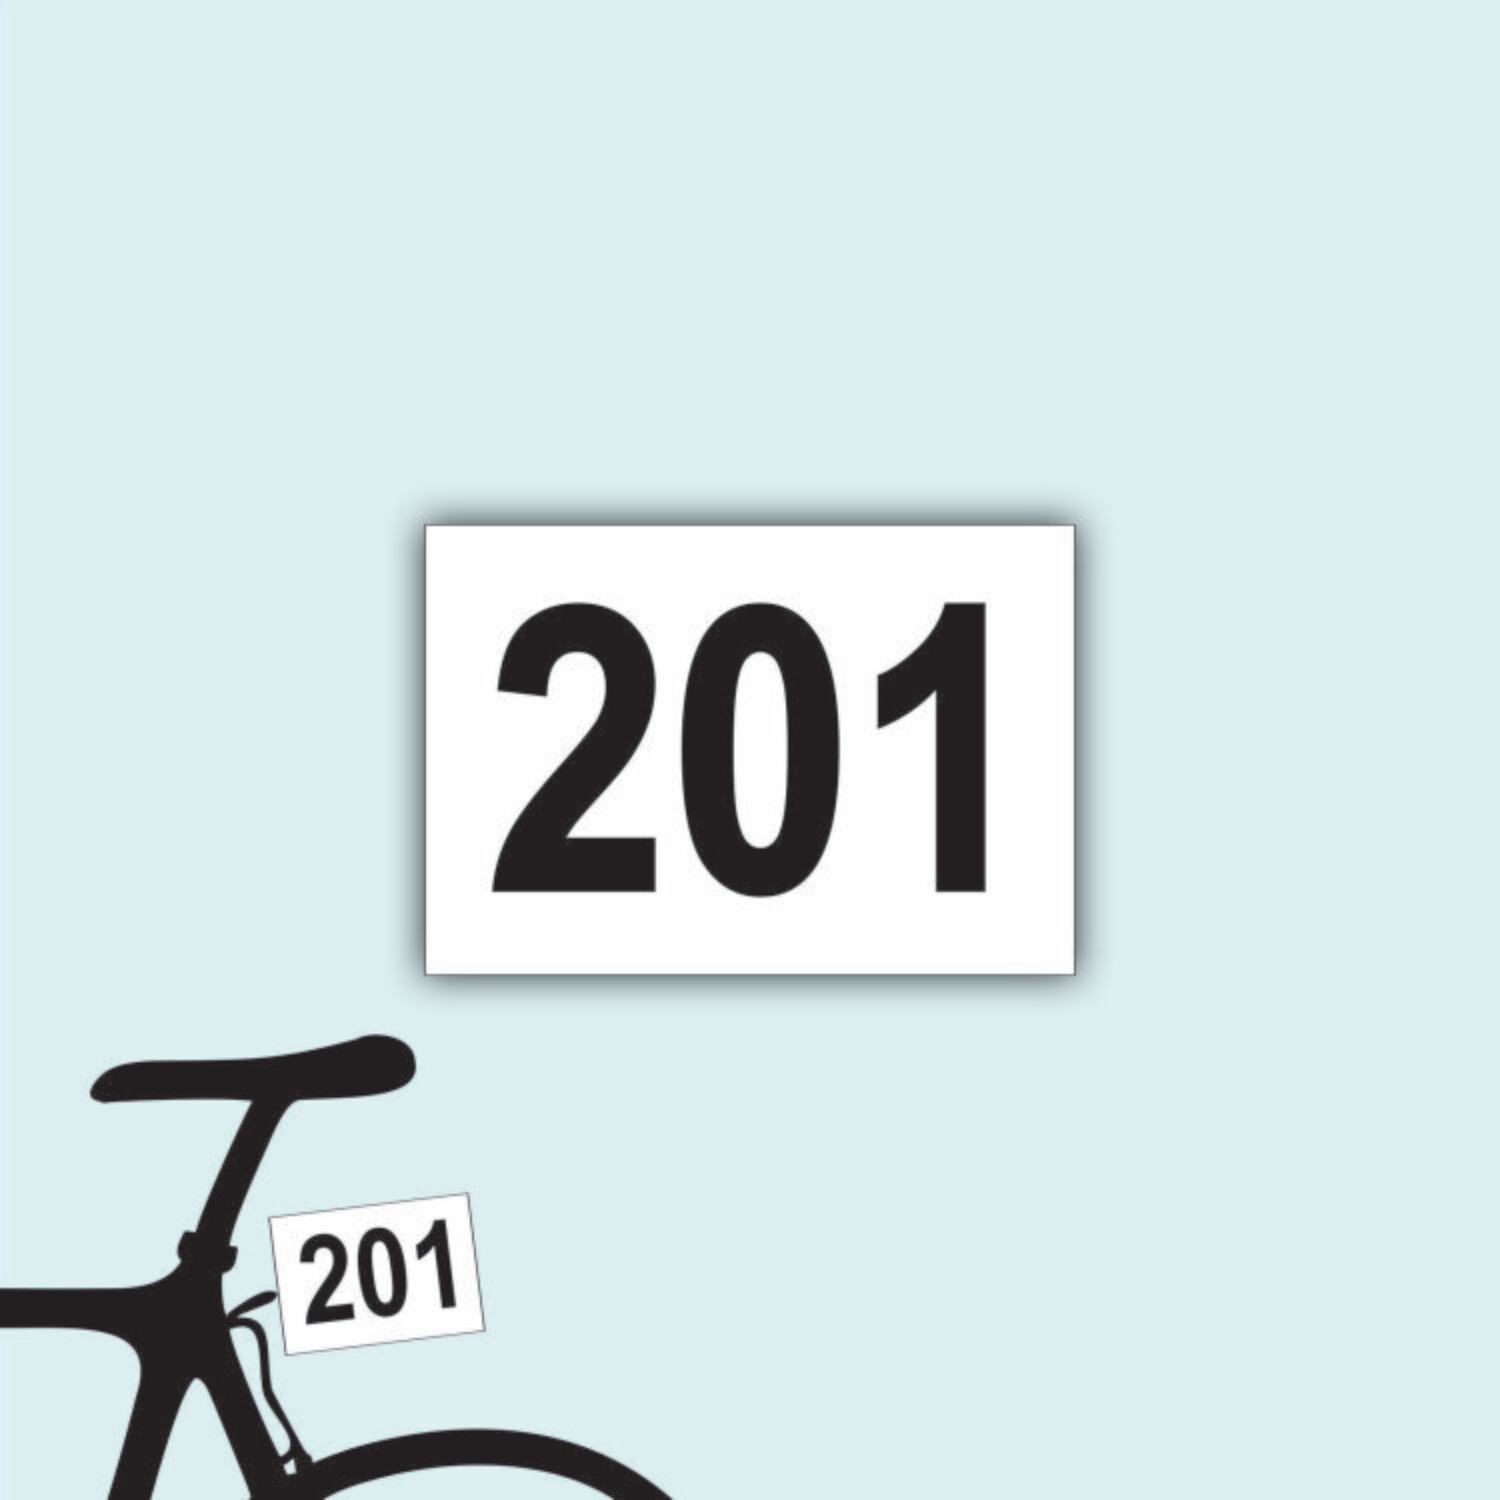 Numeri da Telaio Serie DA 201 A 300